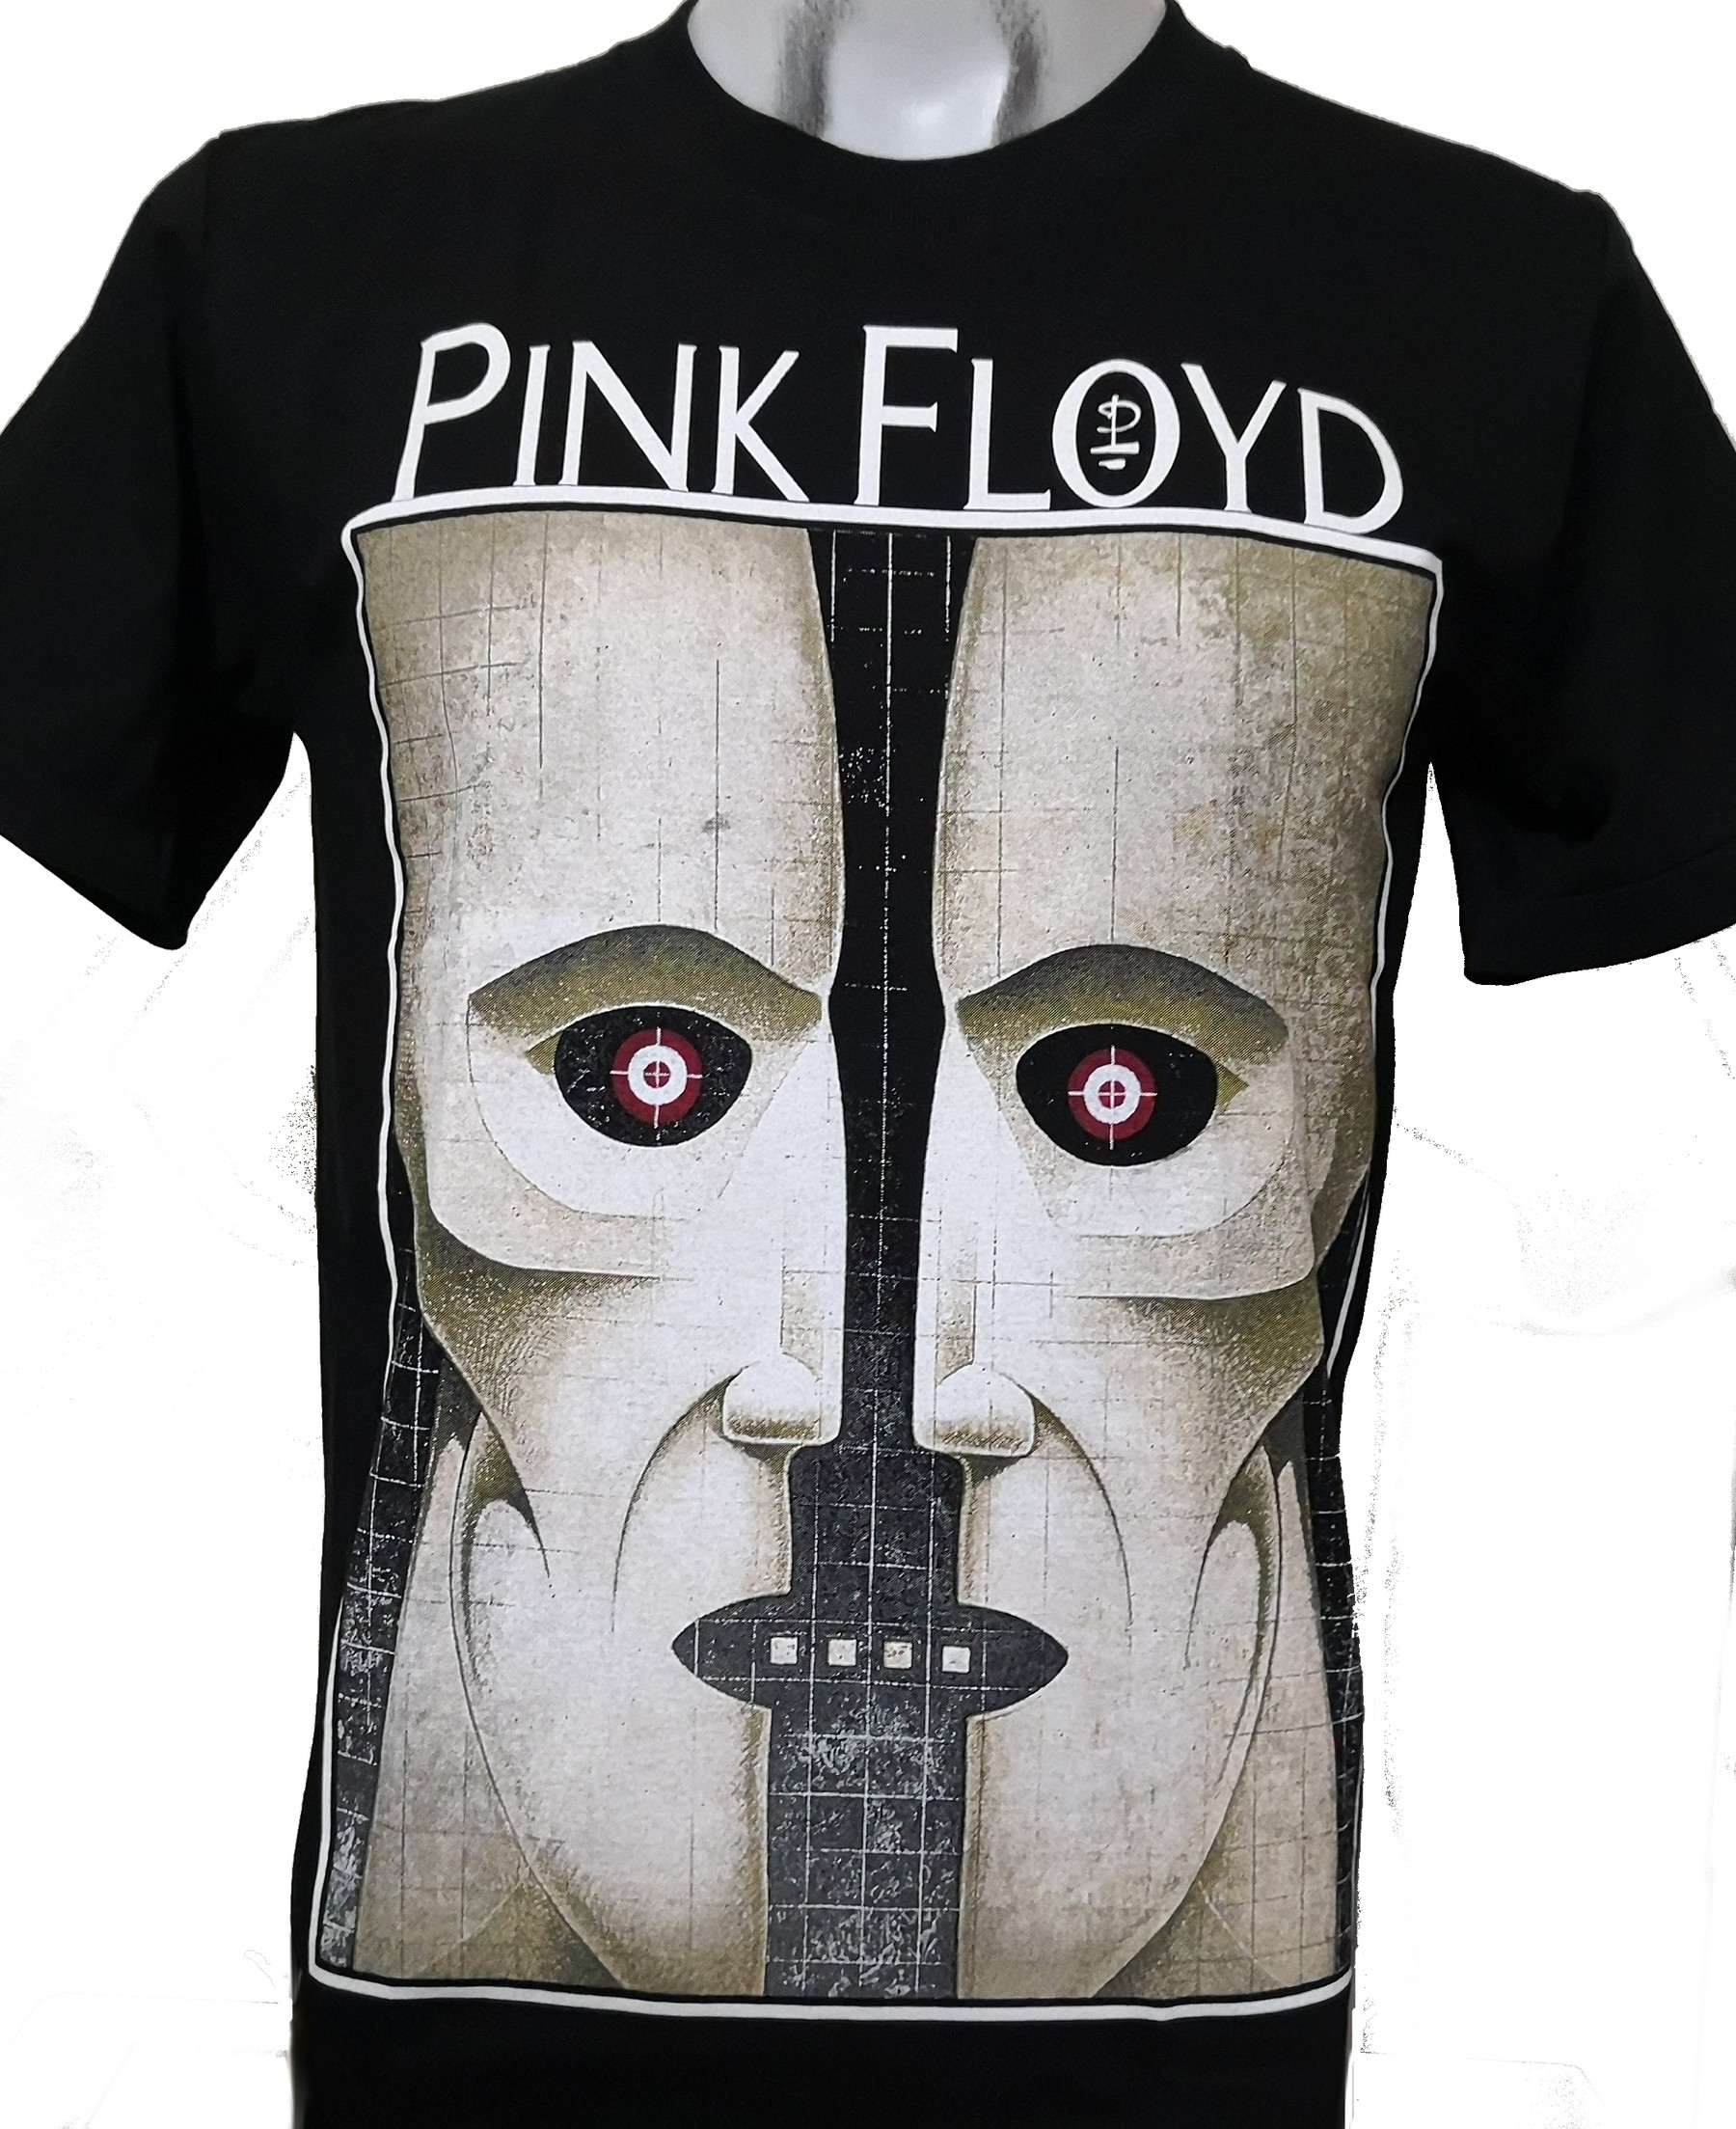 Pink Floyd t-shirt size XL